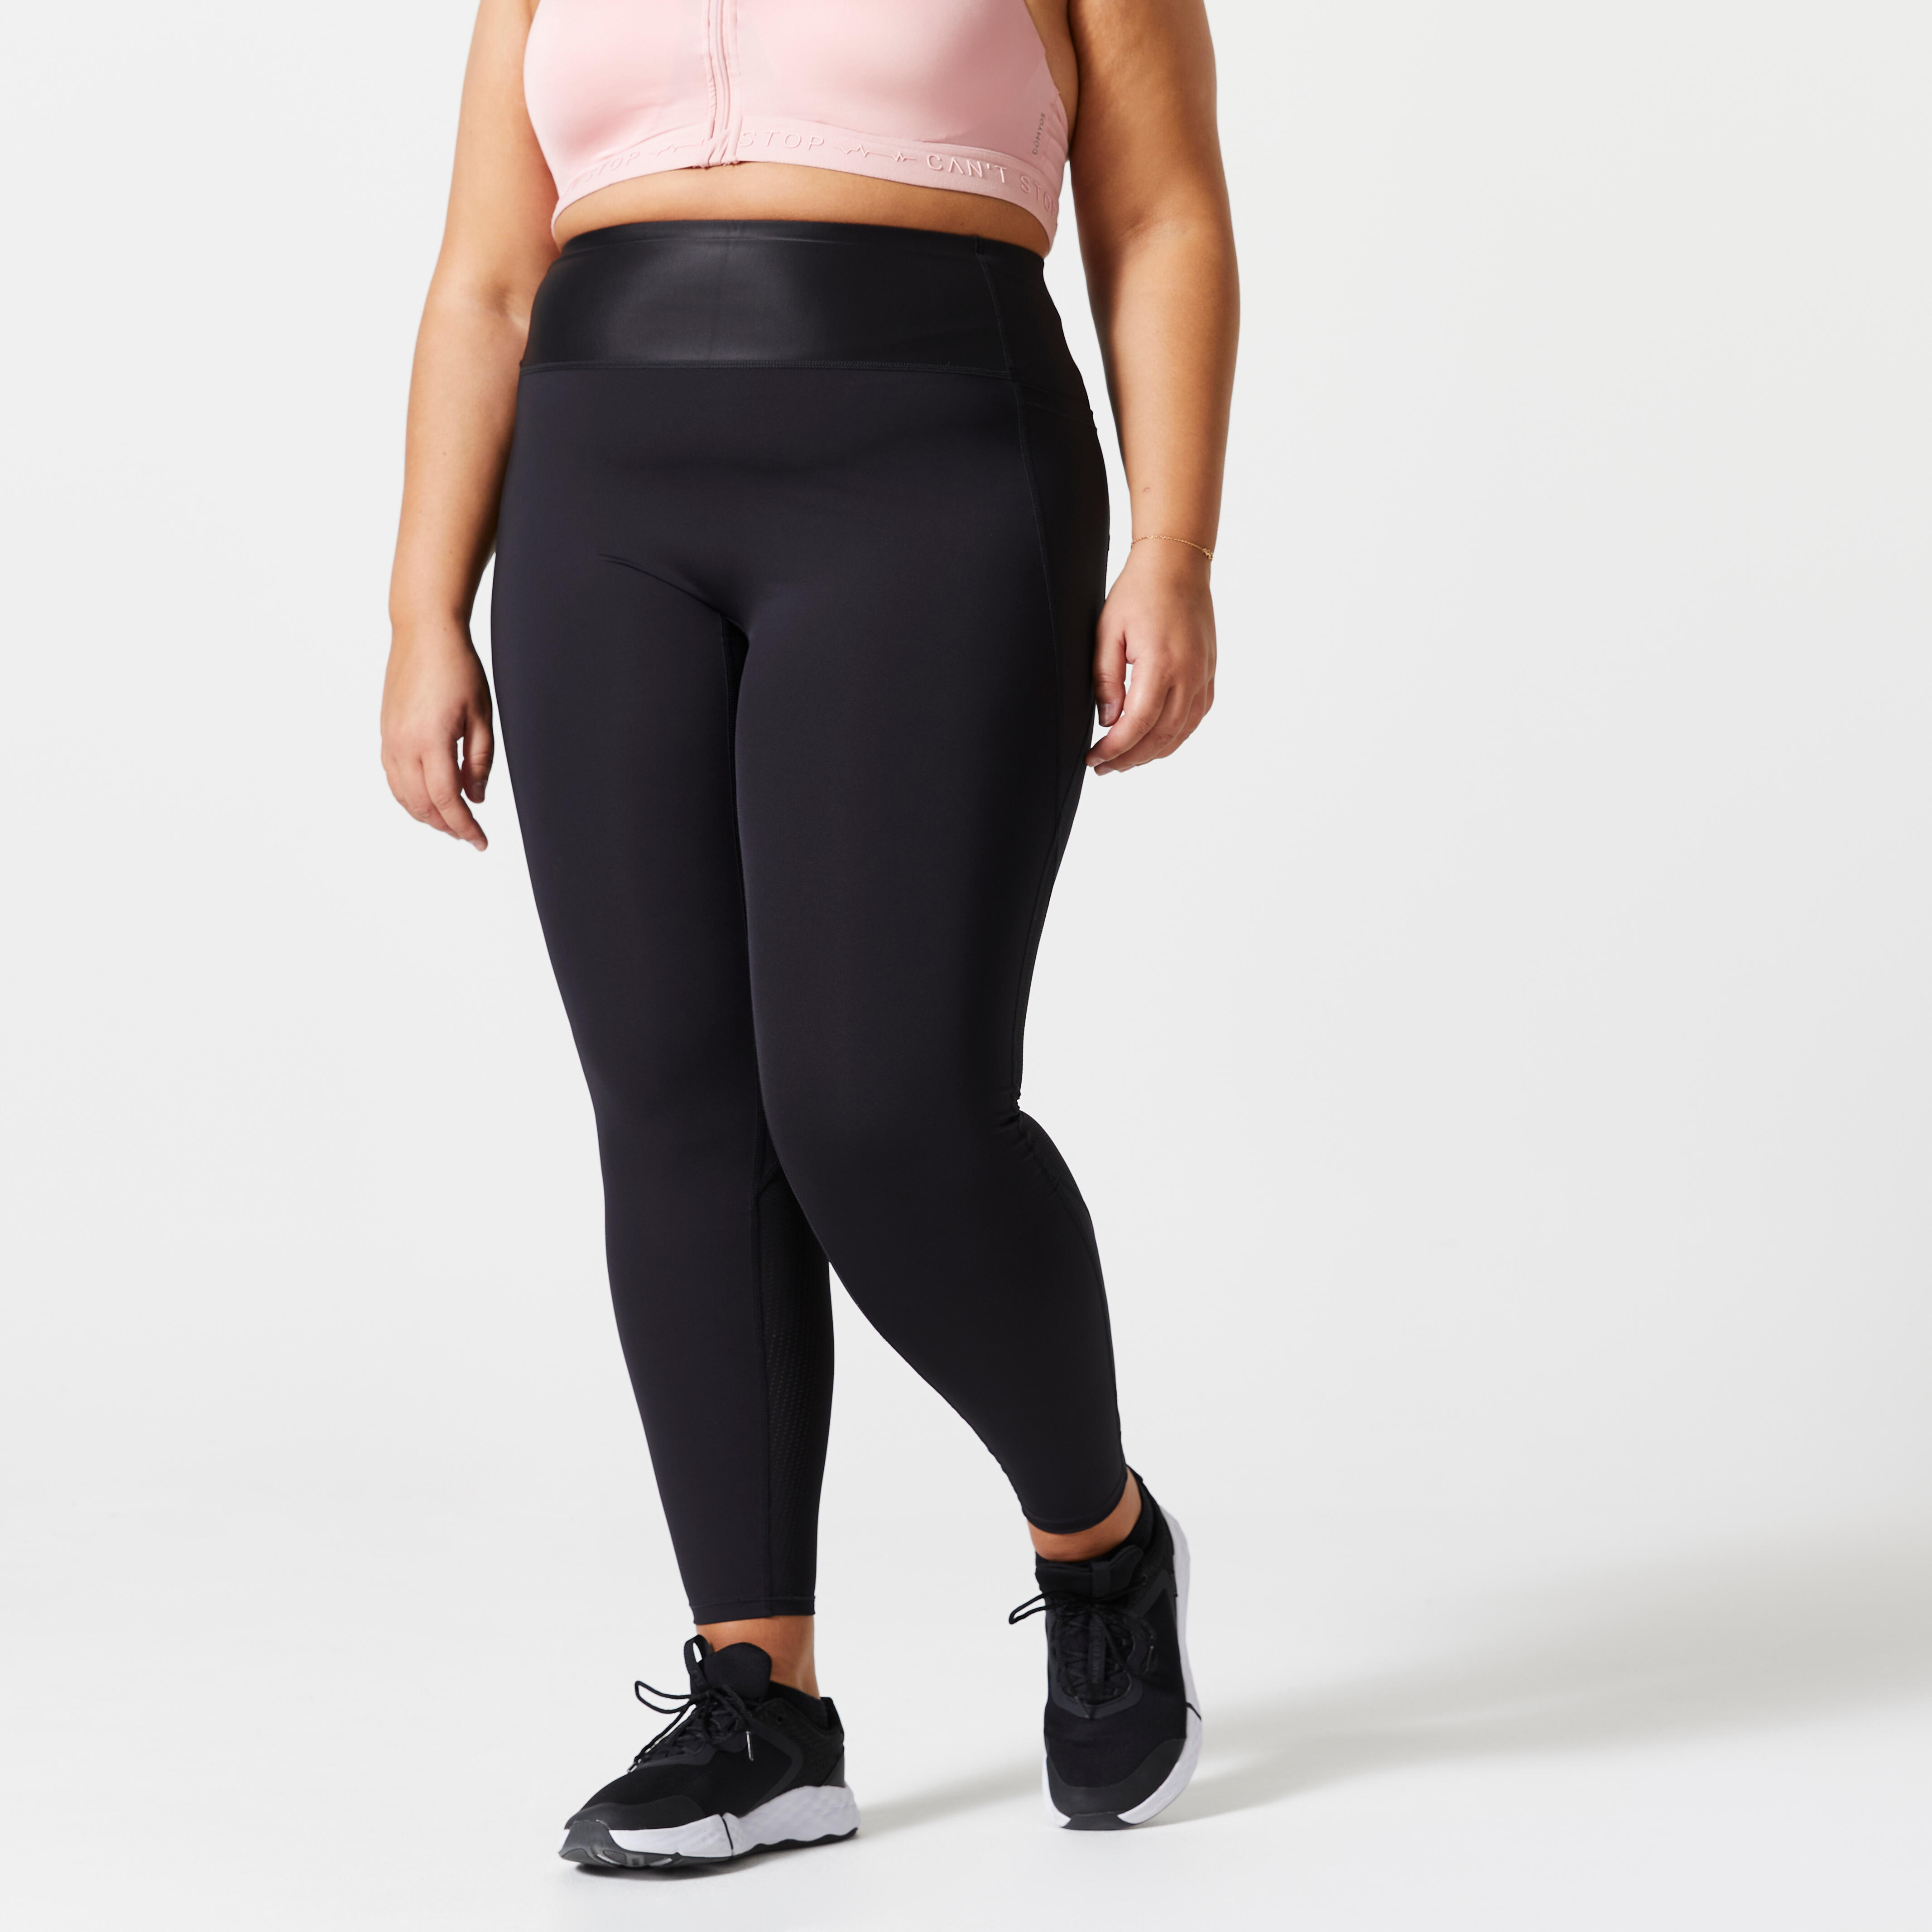 Domyos 500 Women's Cardio Fitness Leggings - Black Pink (XL / W38